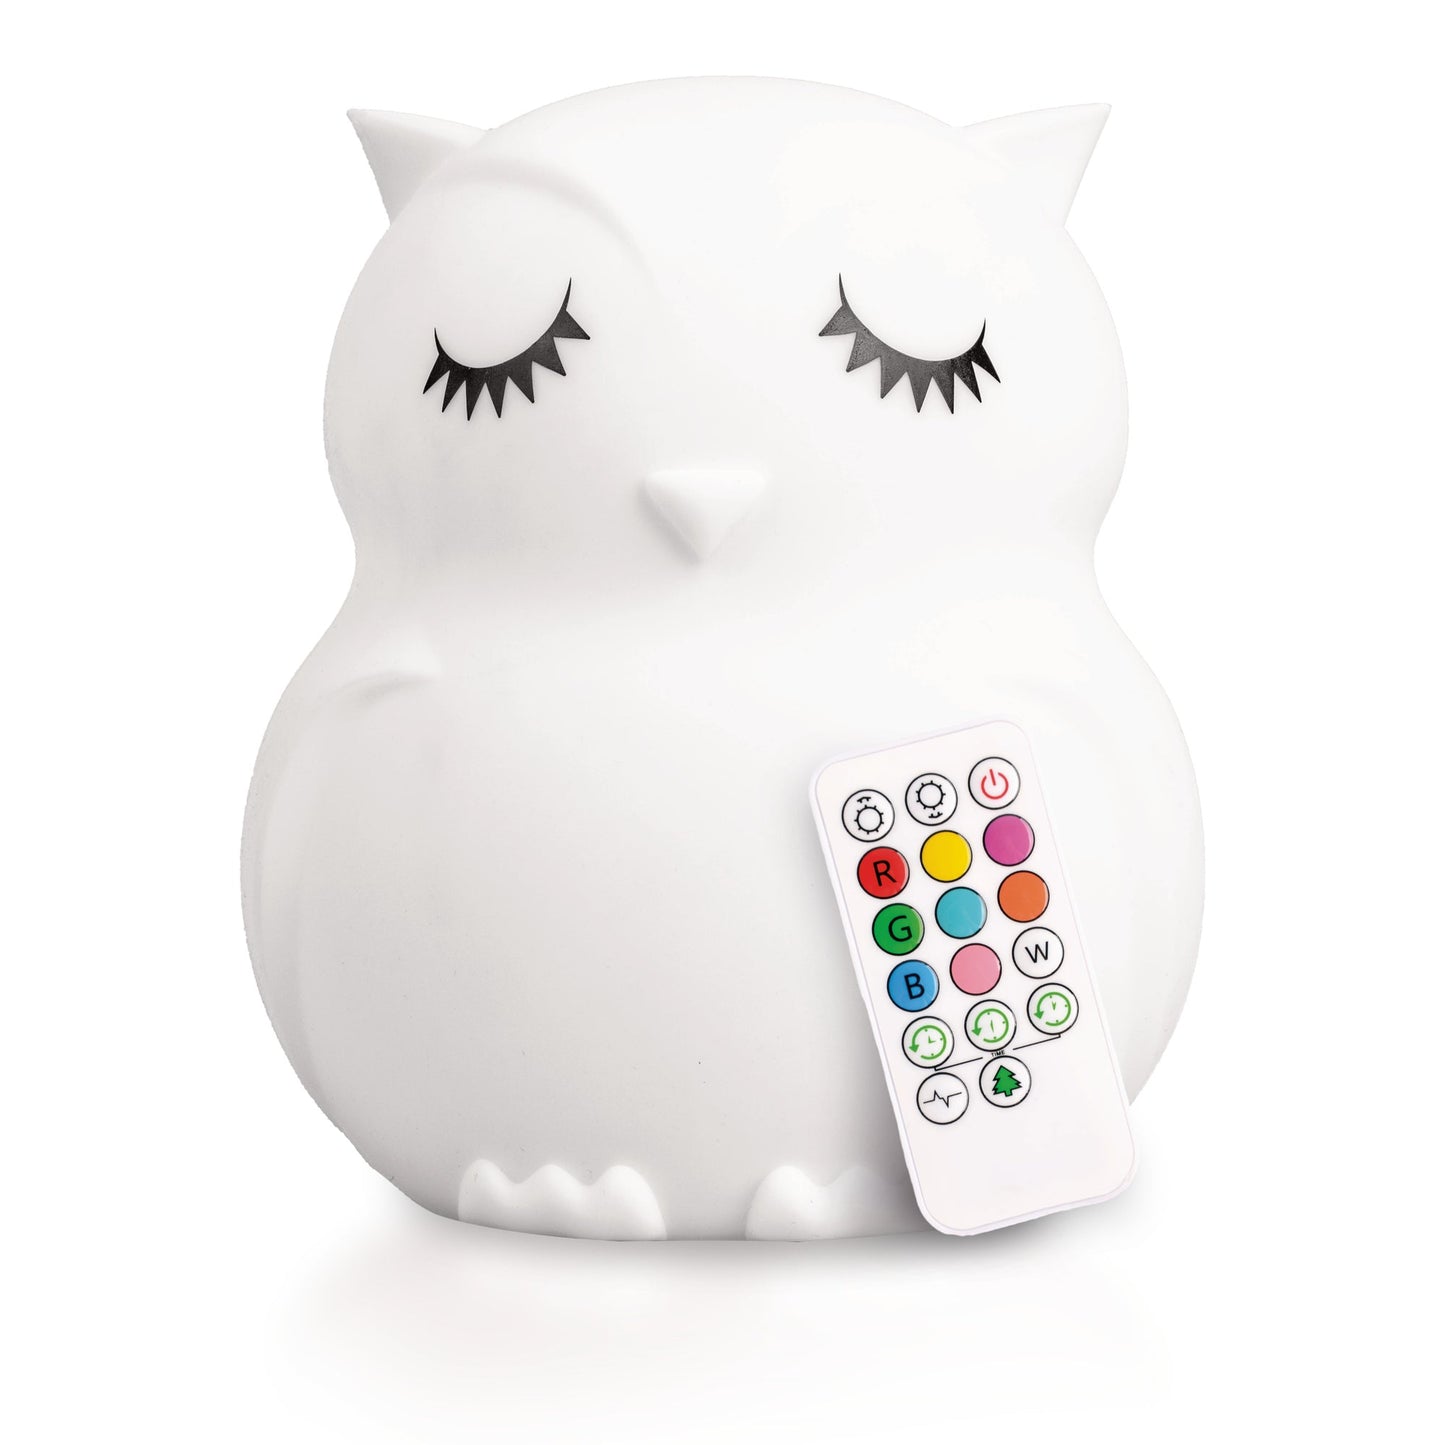 Owl Night Light with Remote